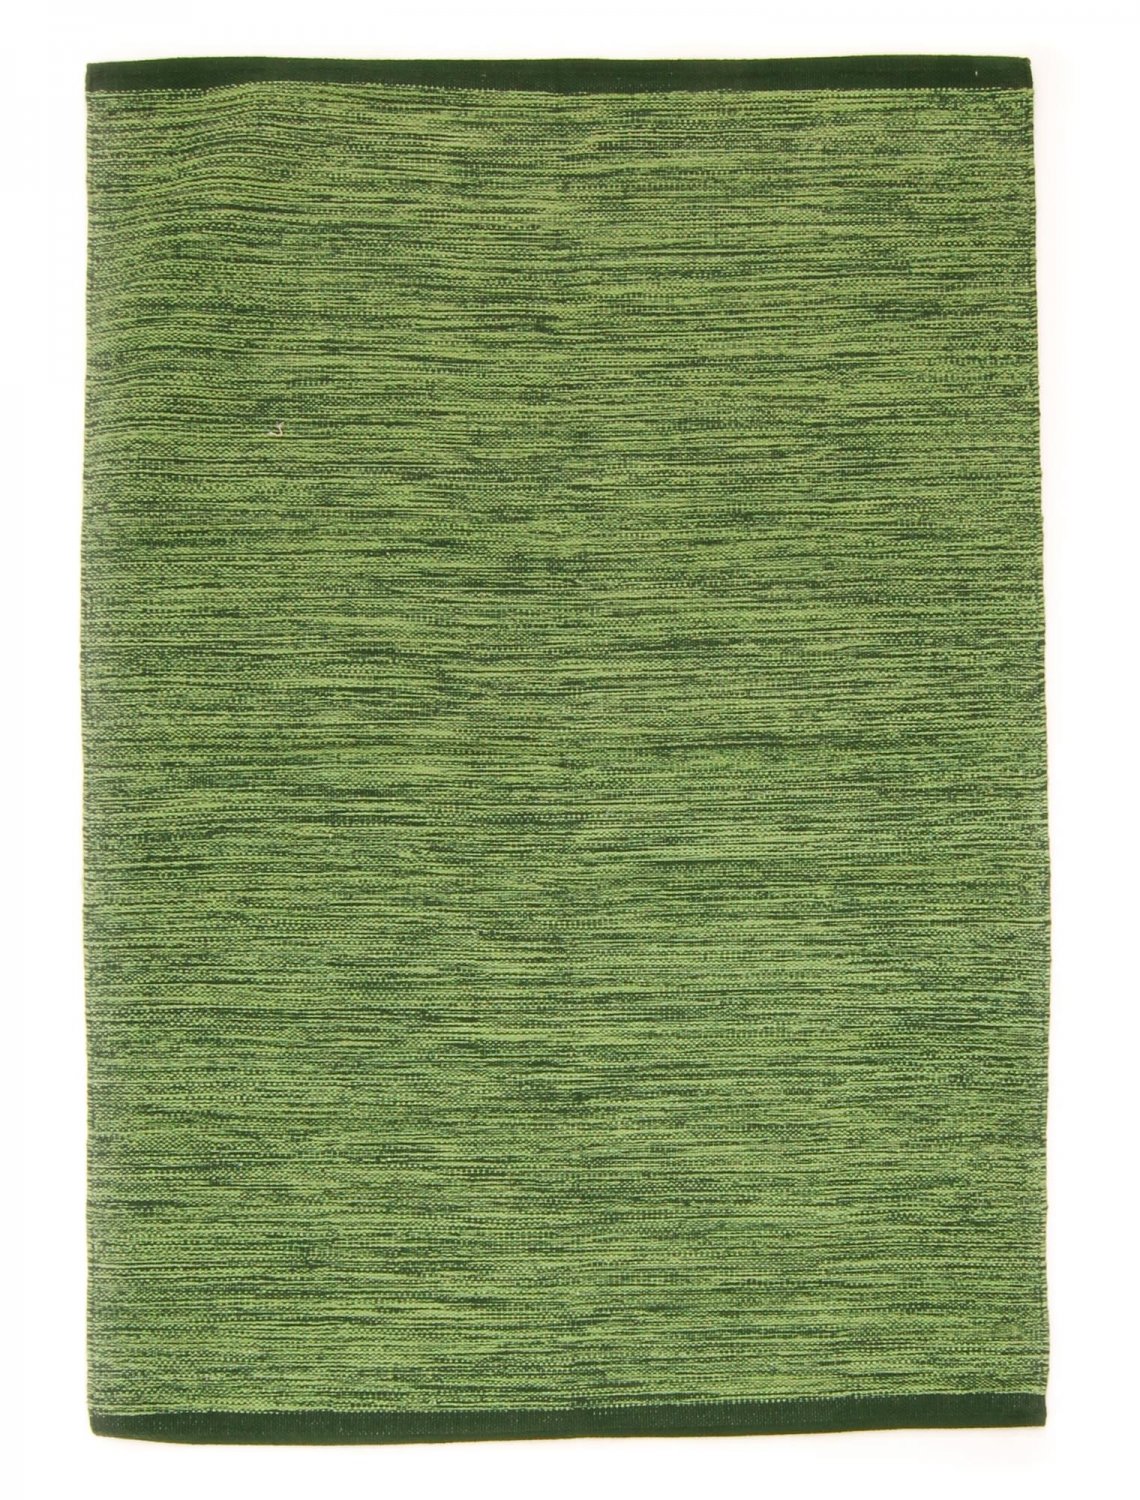 Kludetæppe - Slite (grøn)